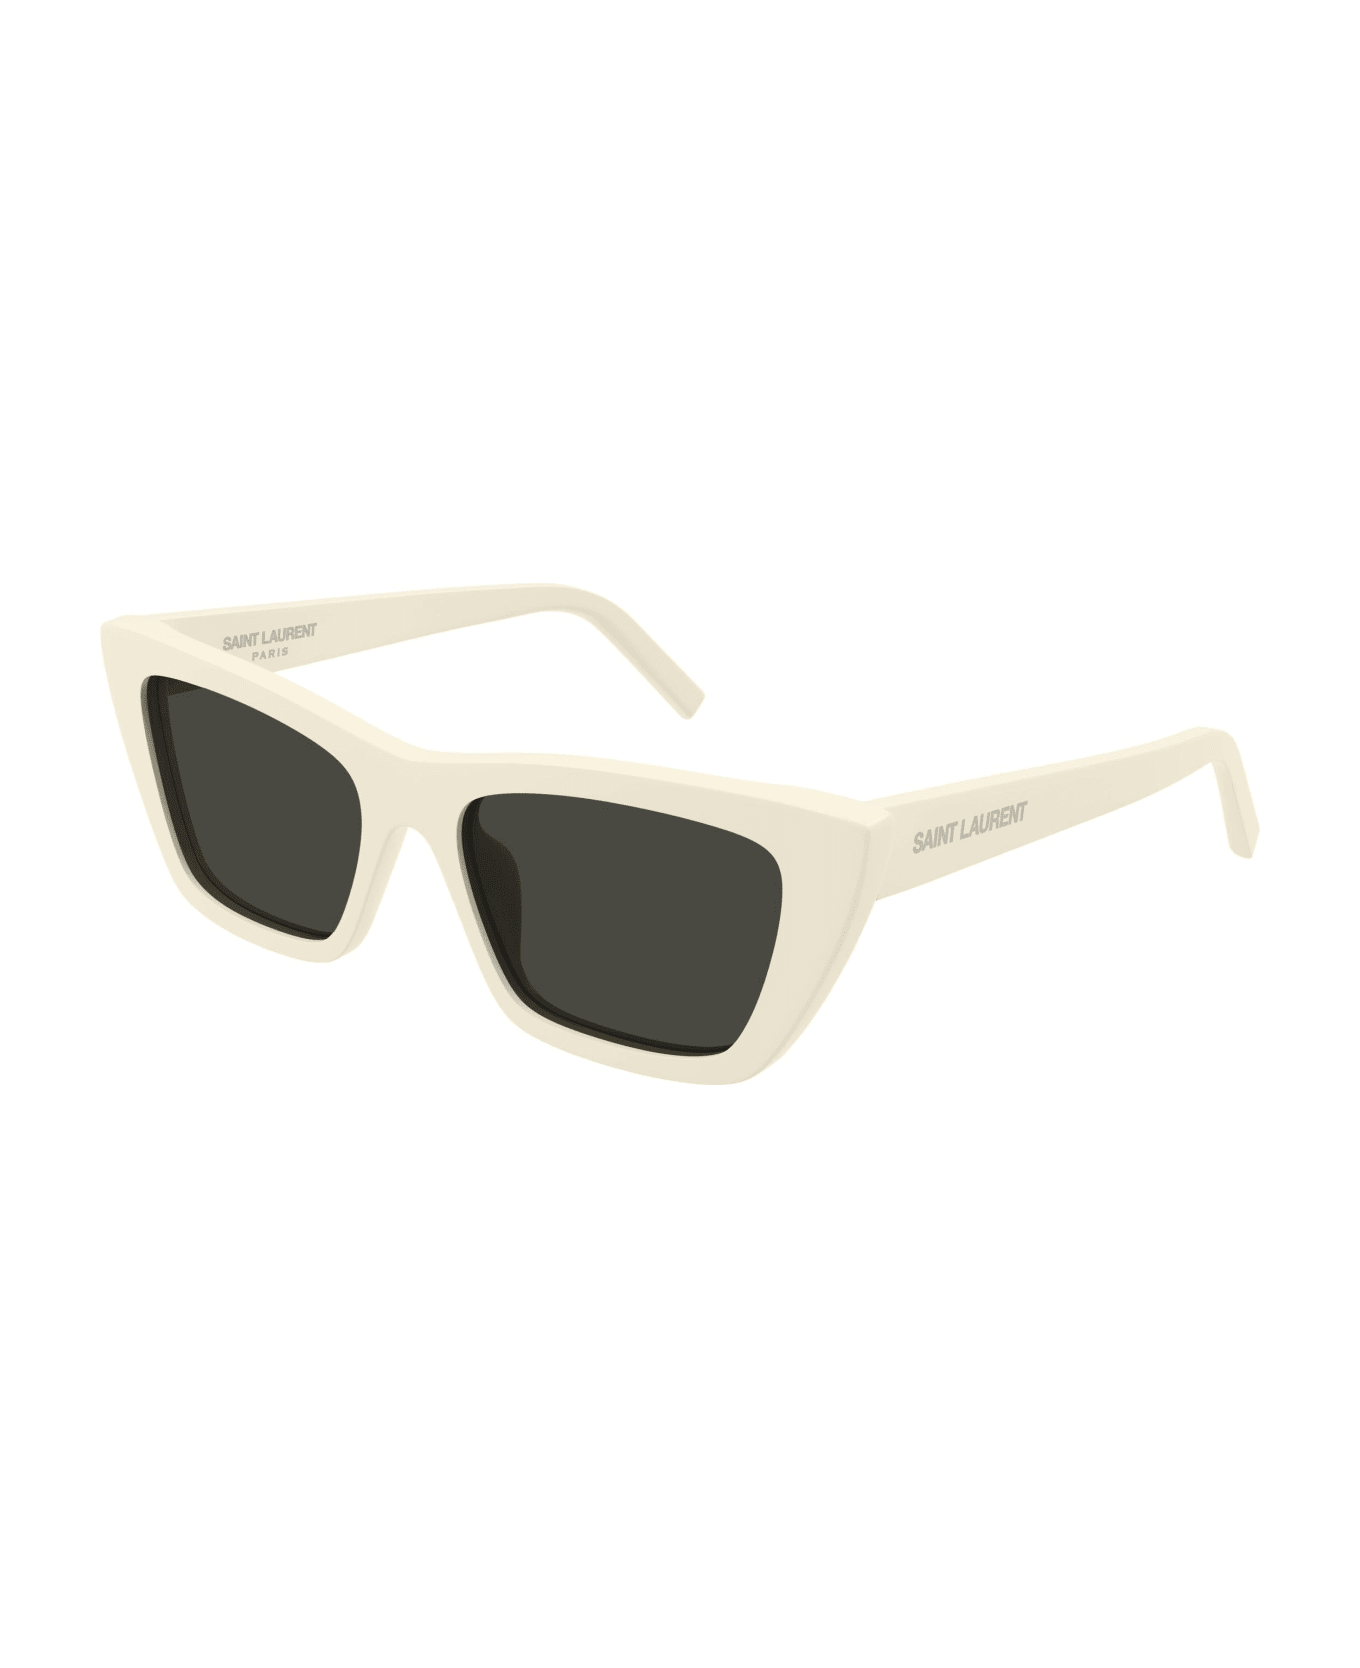 Saint Laurent Eyewear Sunglasses - Avorio/Grigio